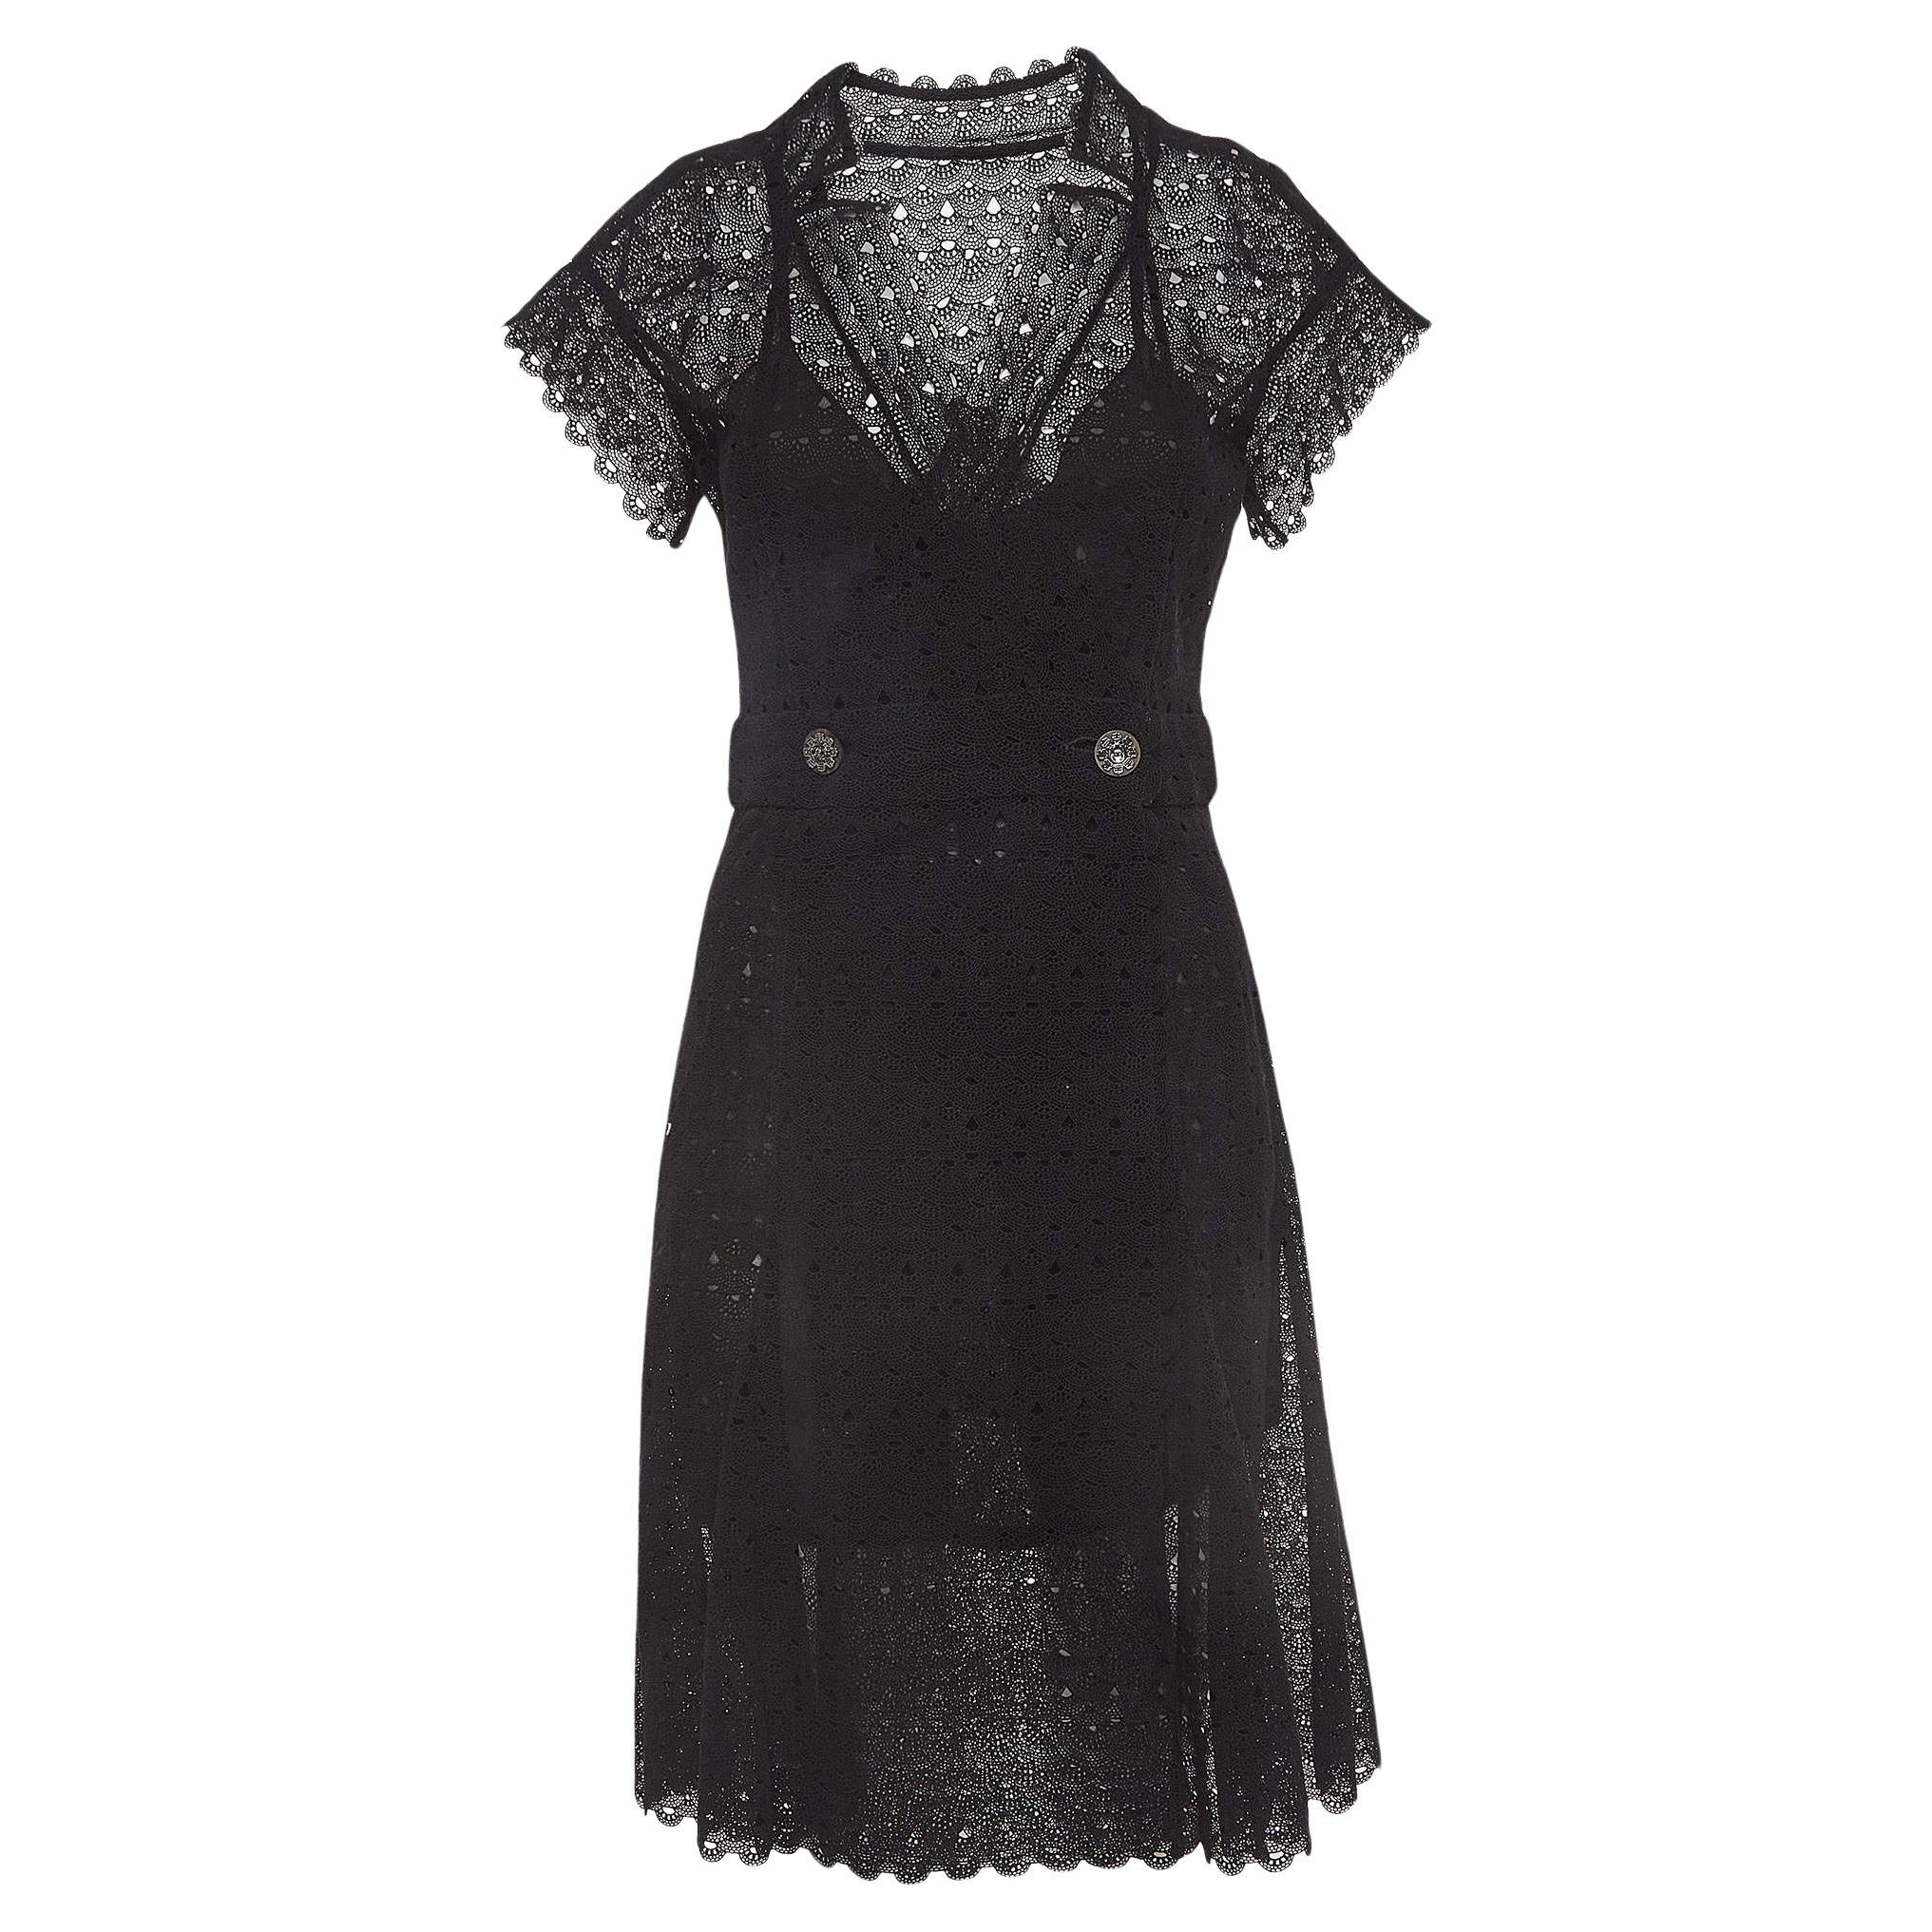 Chanel Black Cotton Crochet Semi Sheer Buttoned Wrap Dress M